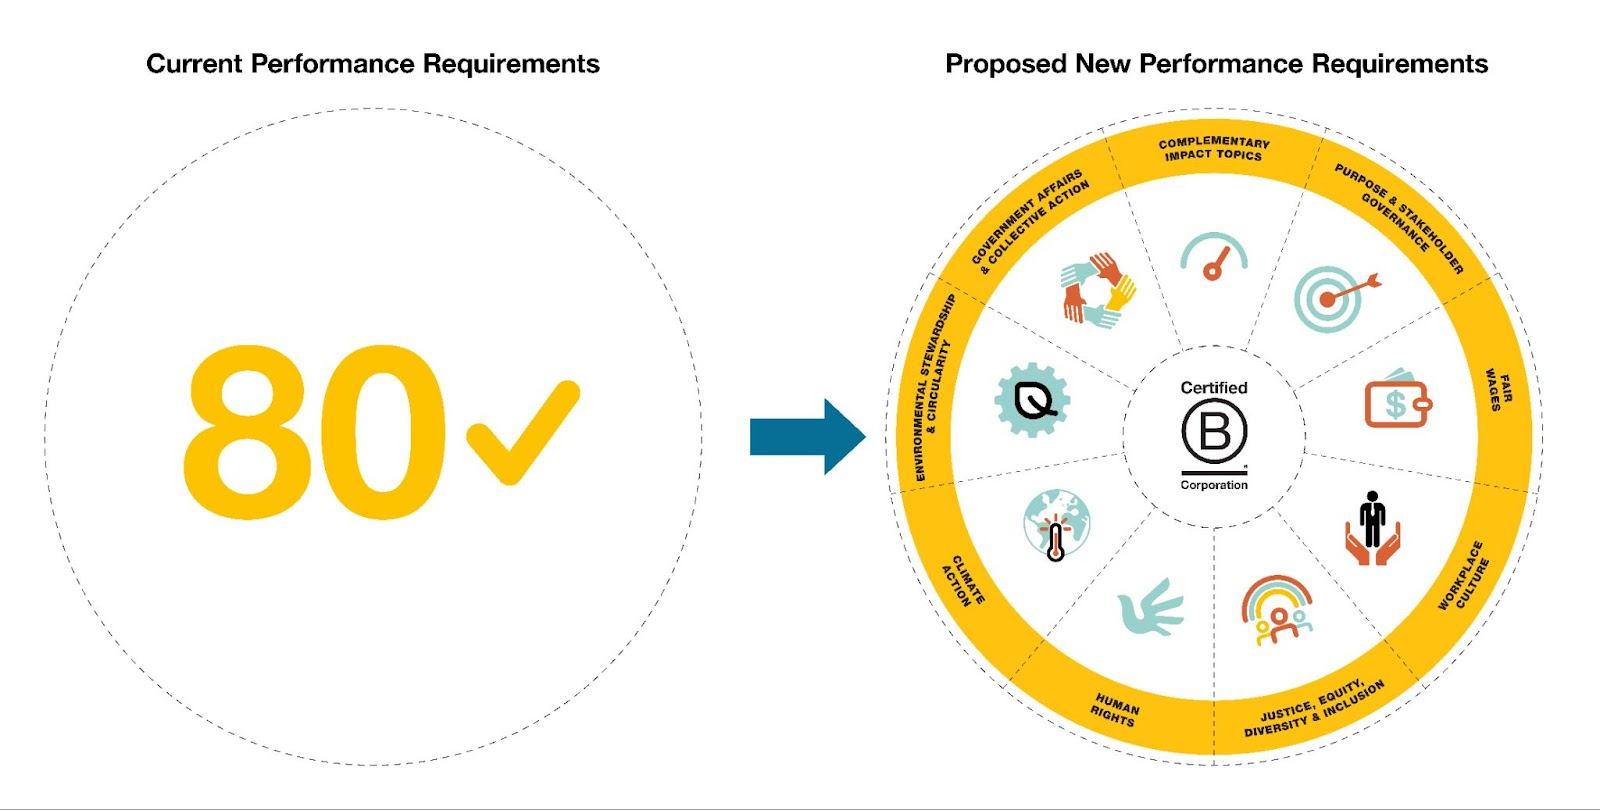 Current performance requirements versus proposed new performance requirements. 